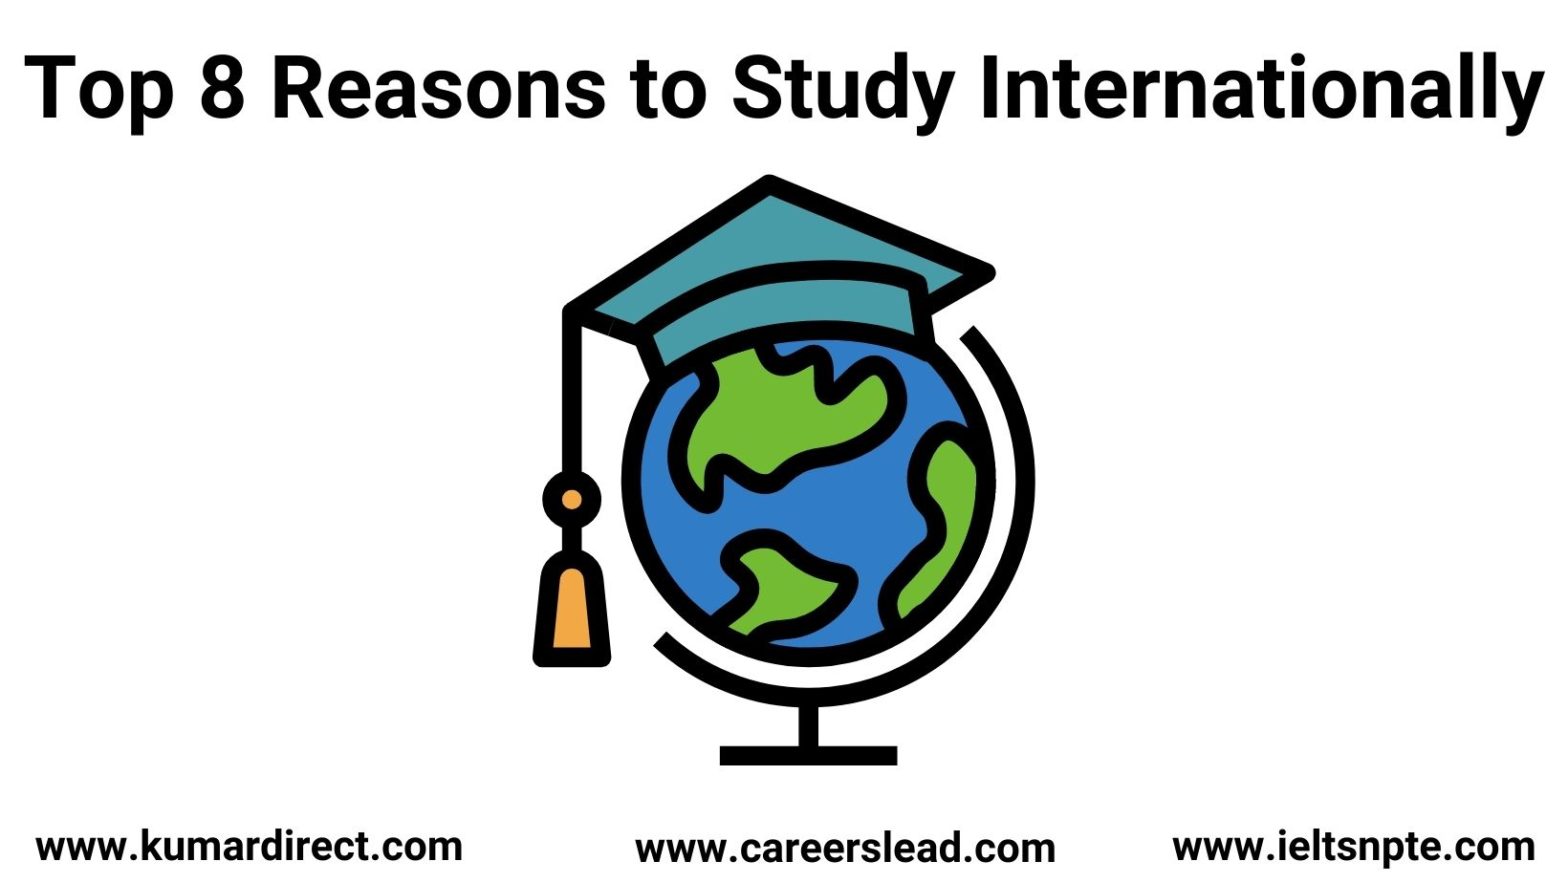 Top 8 Reasons to Study Internationally